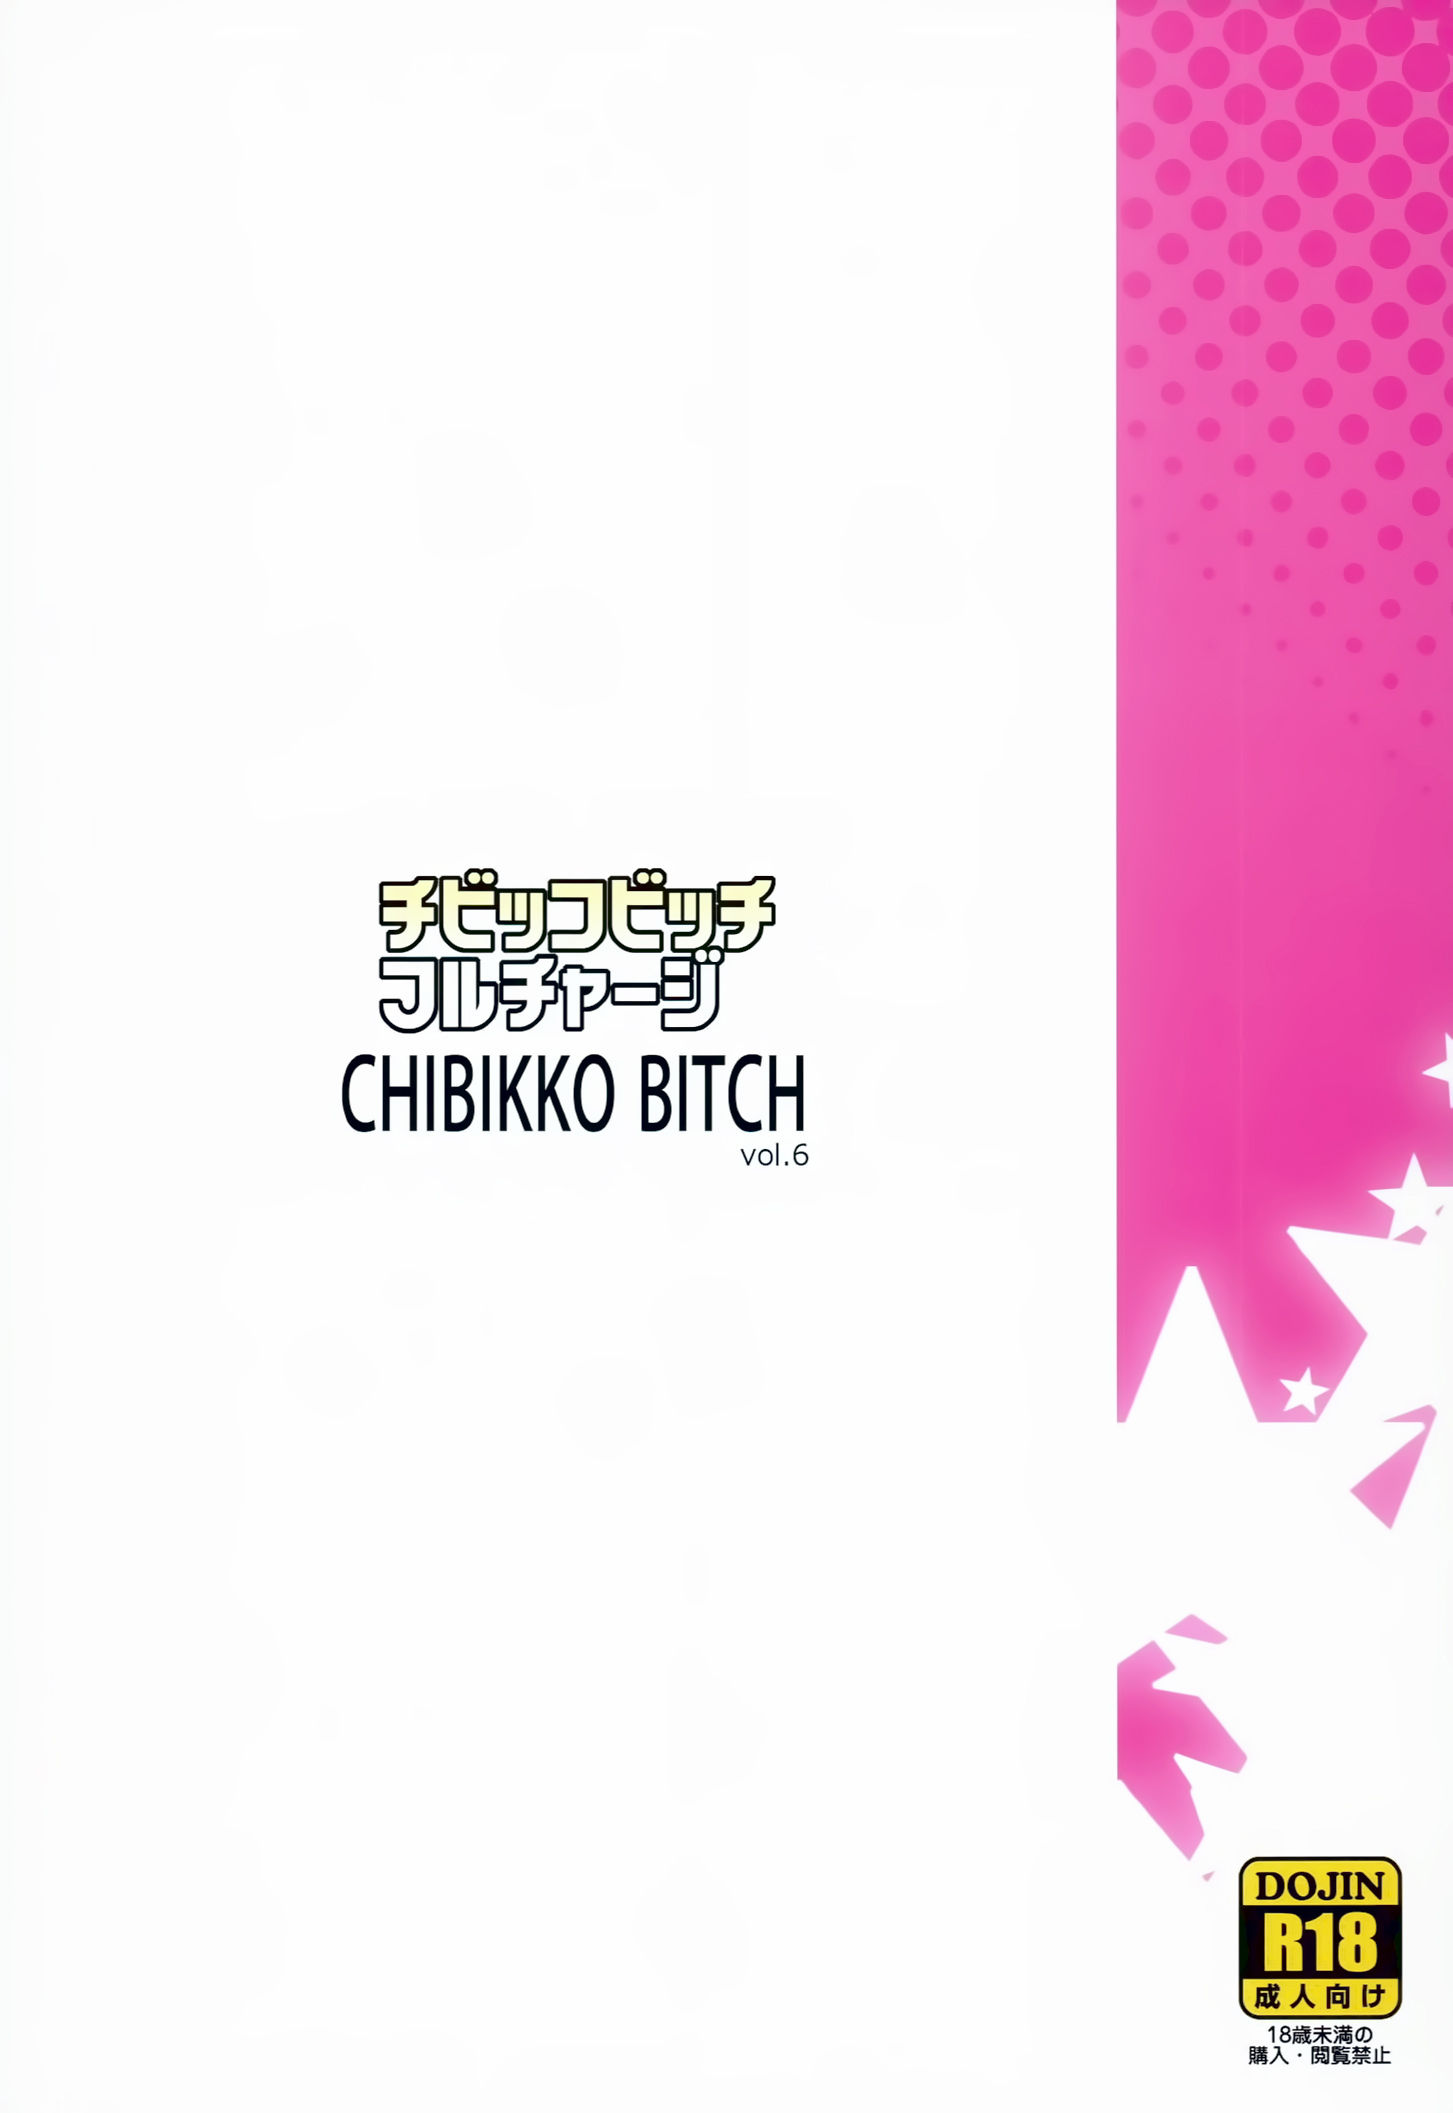 Chibikko Bitch Full charge - 25